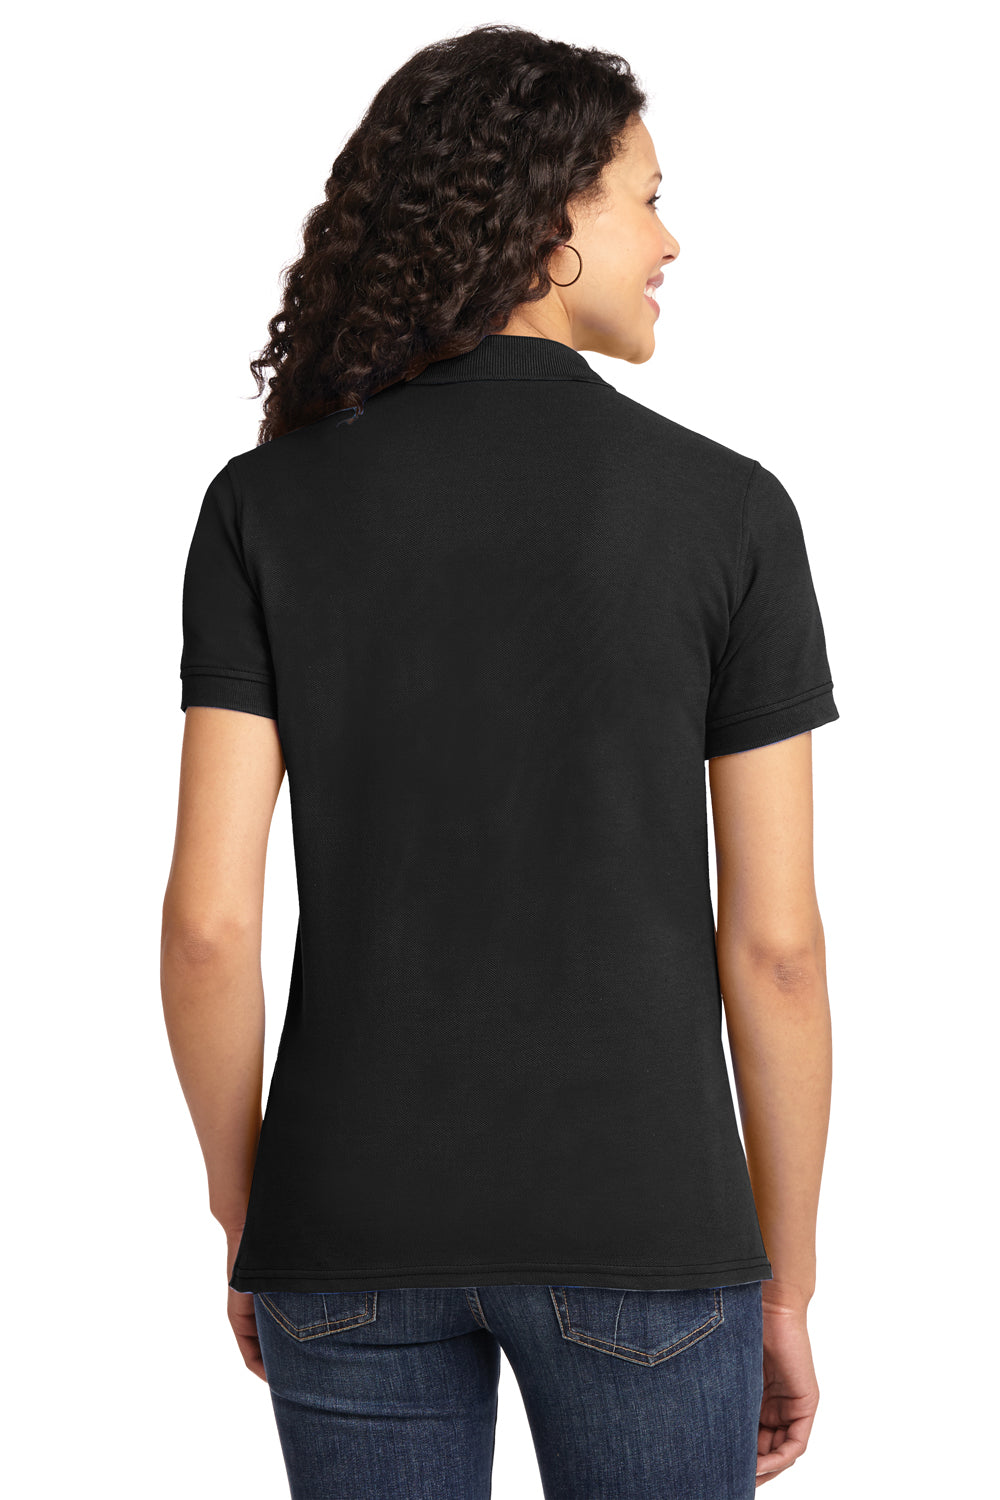 Port & Company LKP155 Womens Core Stain Resistant Short Sleeve Polo Shirt Black Back